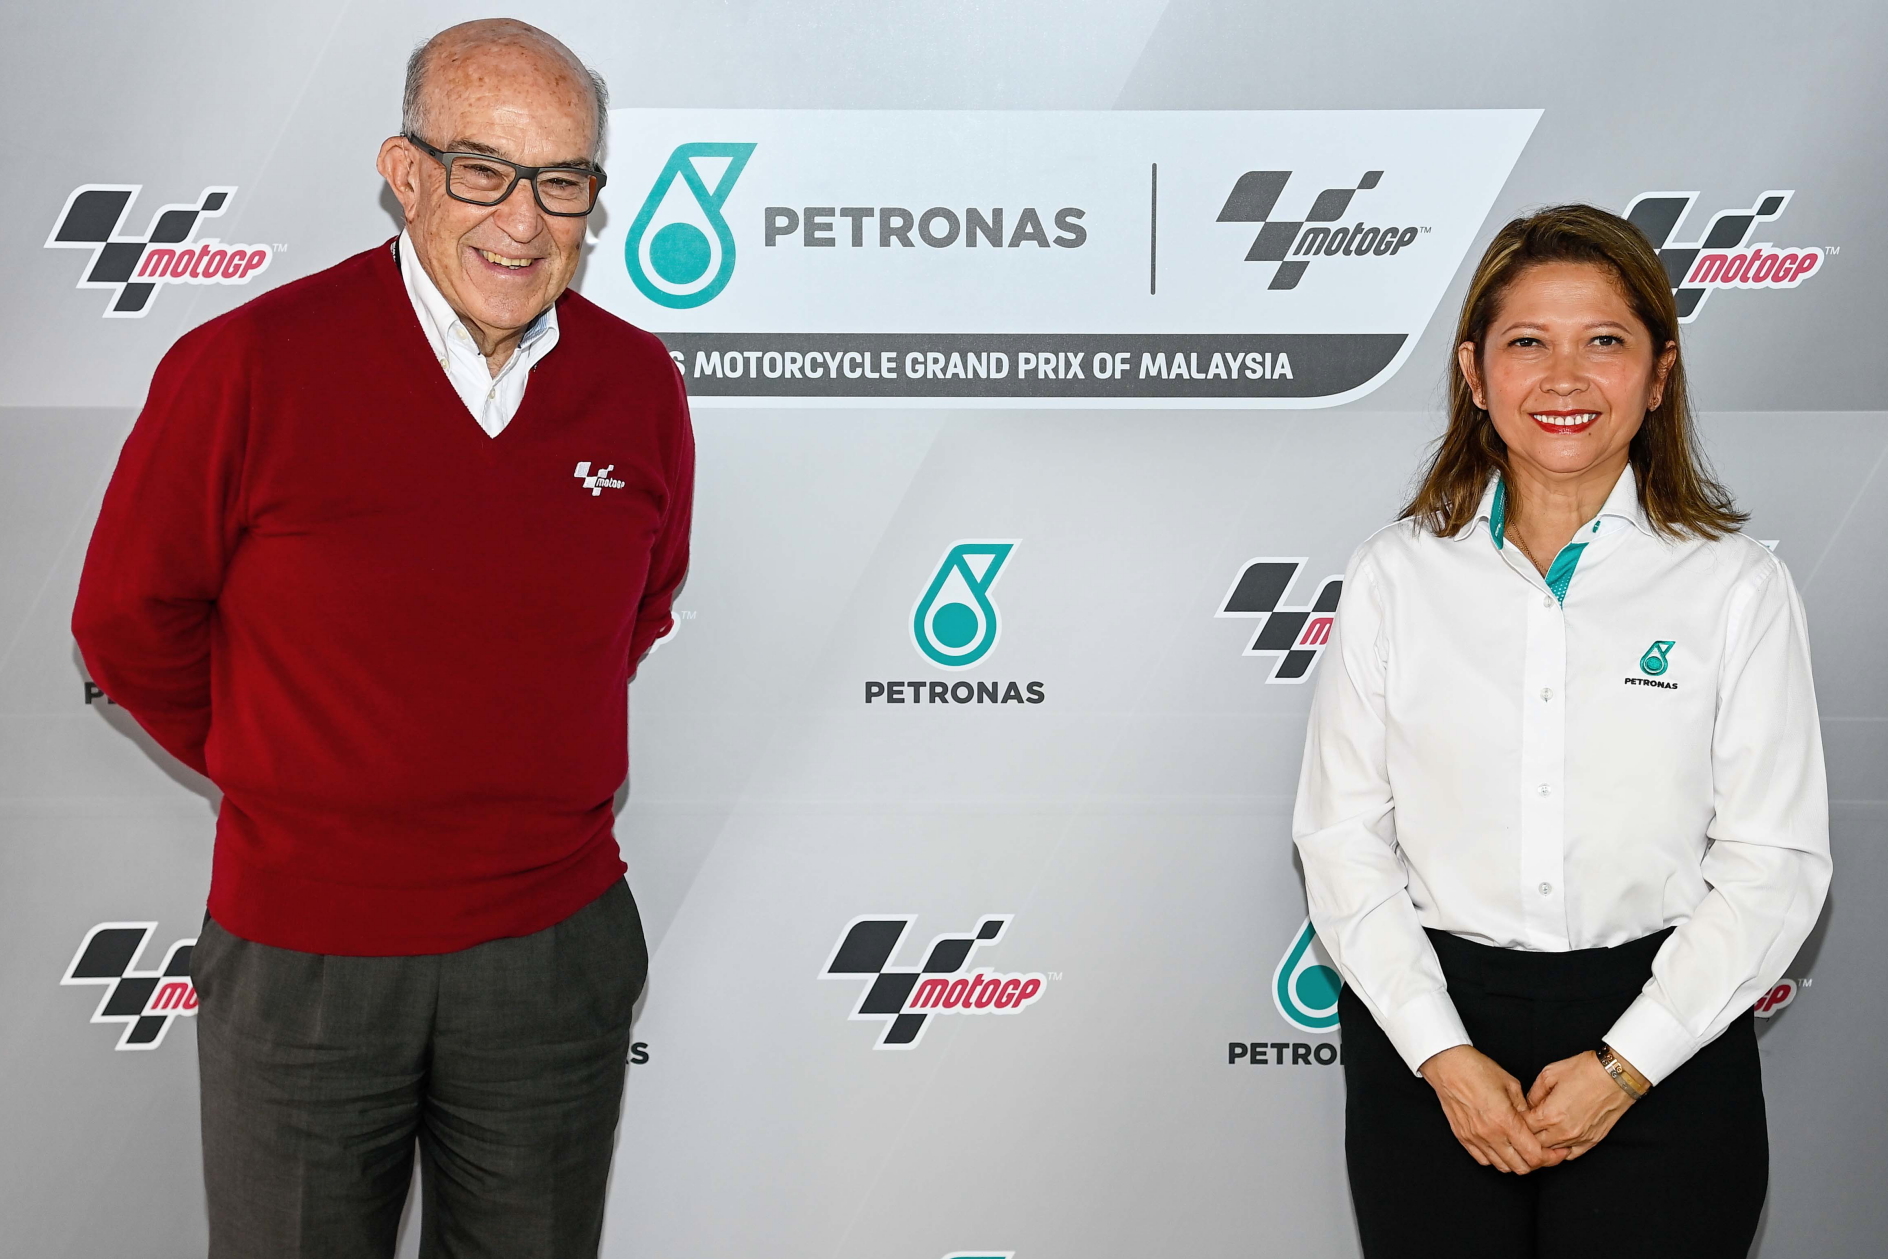 Carmelo Ezpeleta, Dorna CEO (left), with Datin Anita Azrina Abdul Aziz, Senior GM of Group Strategic Communications, Petronas. Click to enlarge.